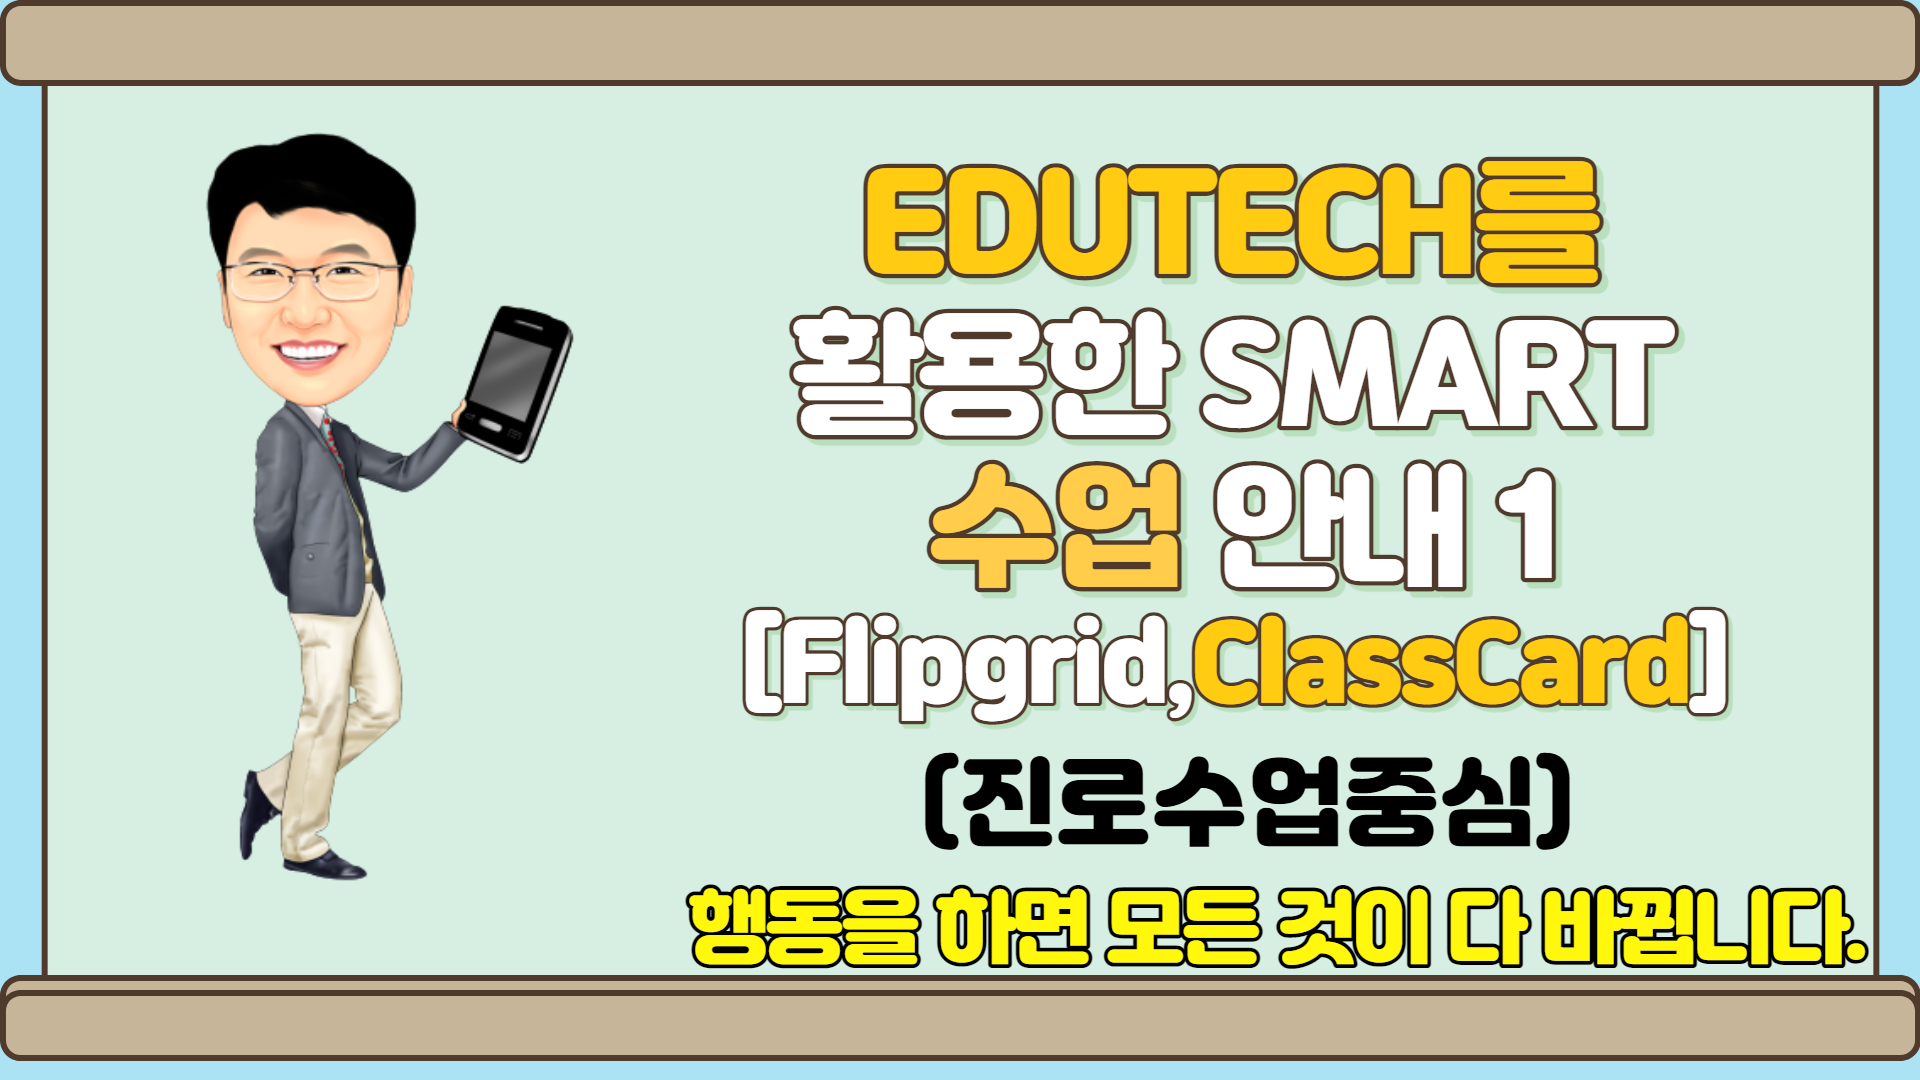 EDUTECH를 활용한 smart 수업 방법 안내 1(진로수업을 중심으로)(Flipgrid,Classcard)